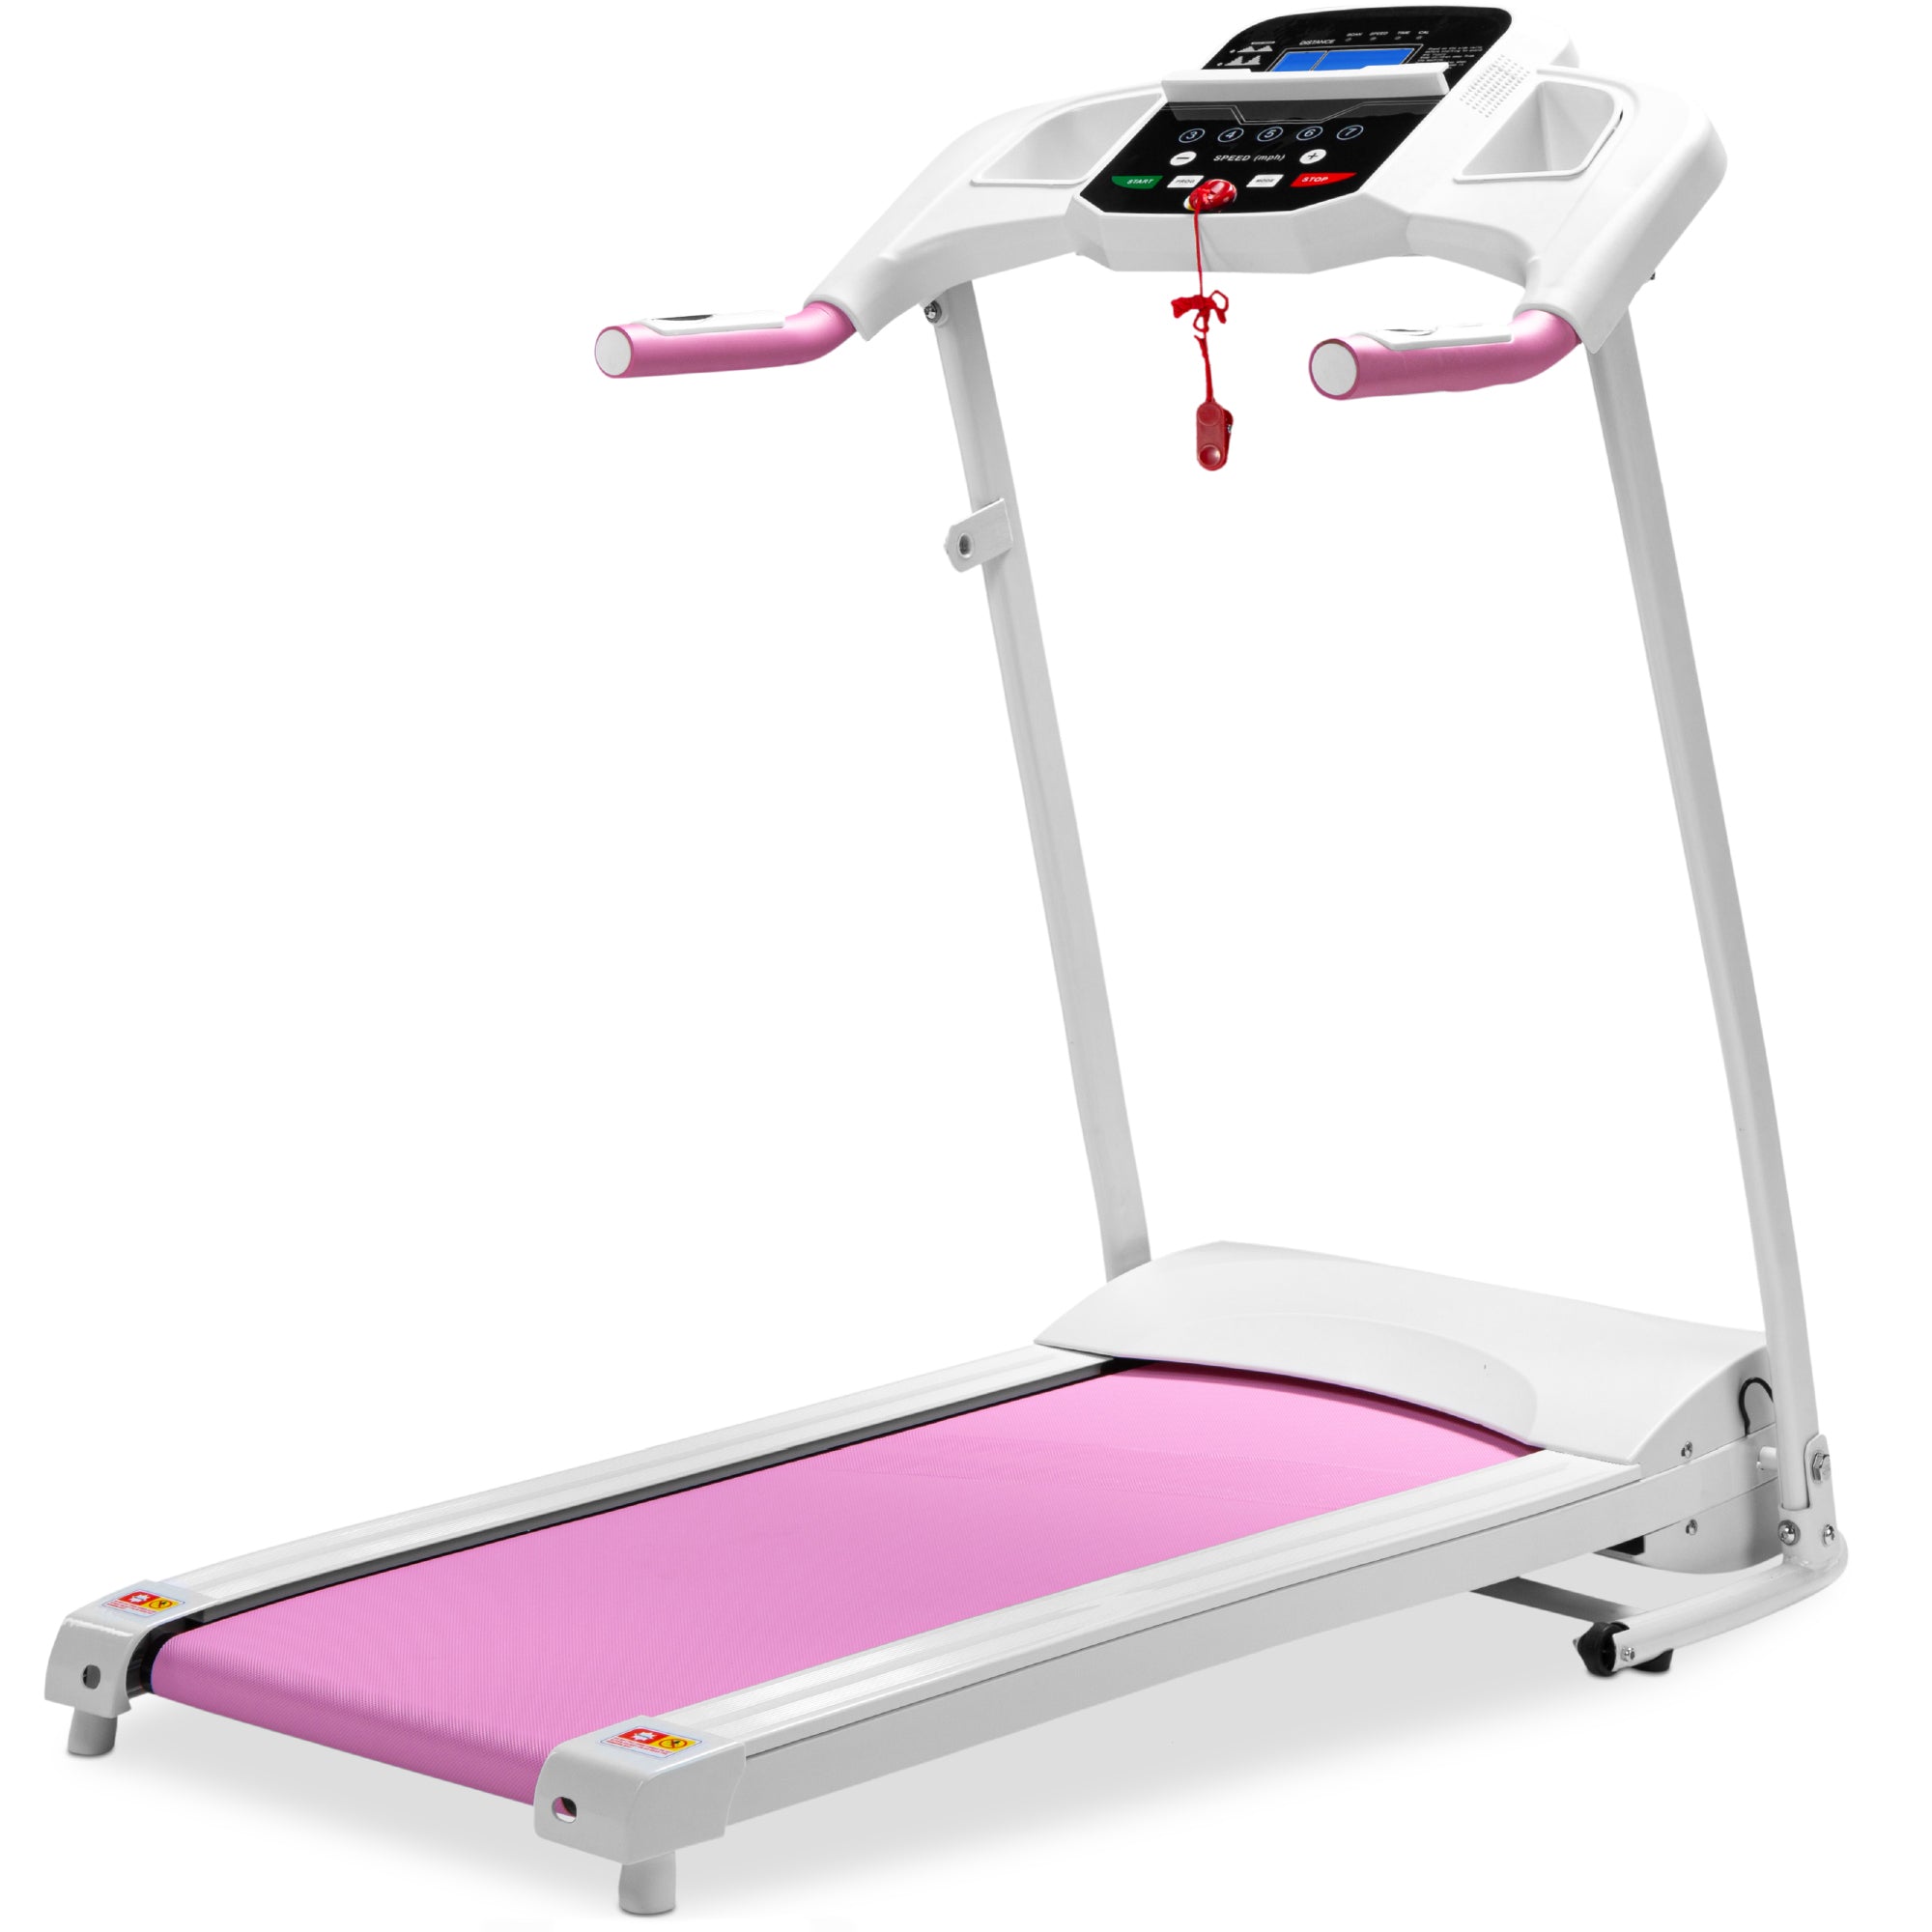 SUGIFT 800W Folding Electric Treadmill, Motorized Fitness Exercise Machine w/ Wheels, Safety Key - Pink